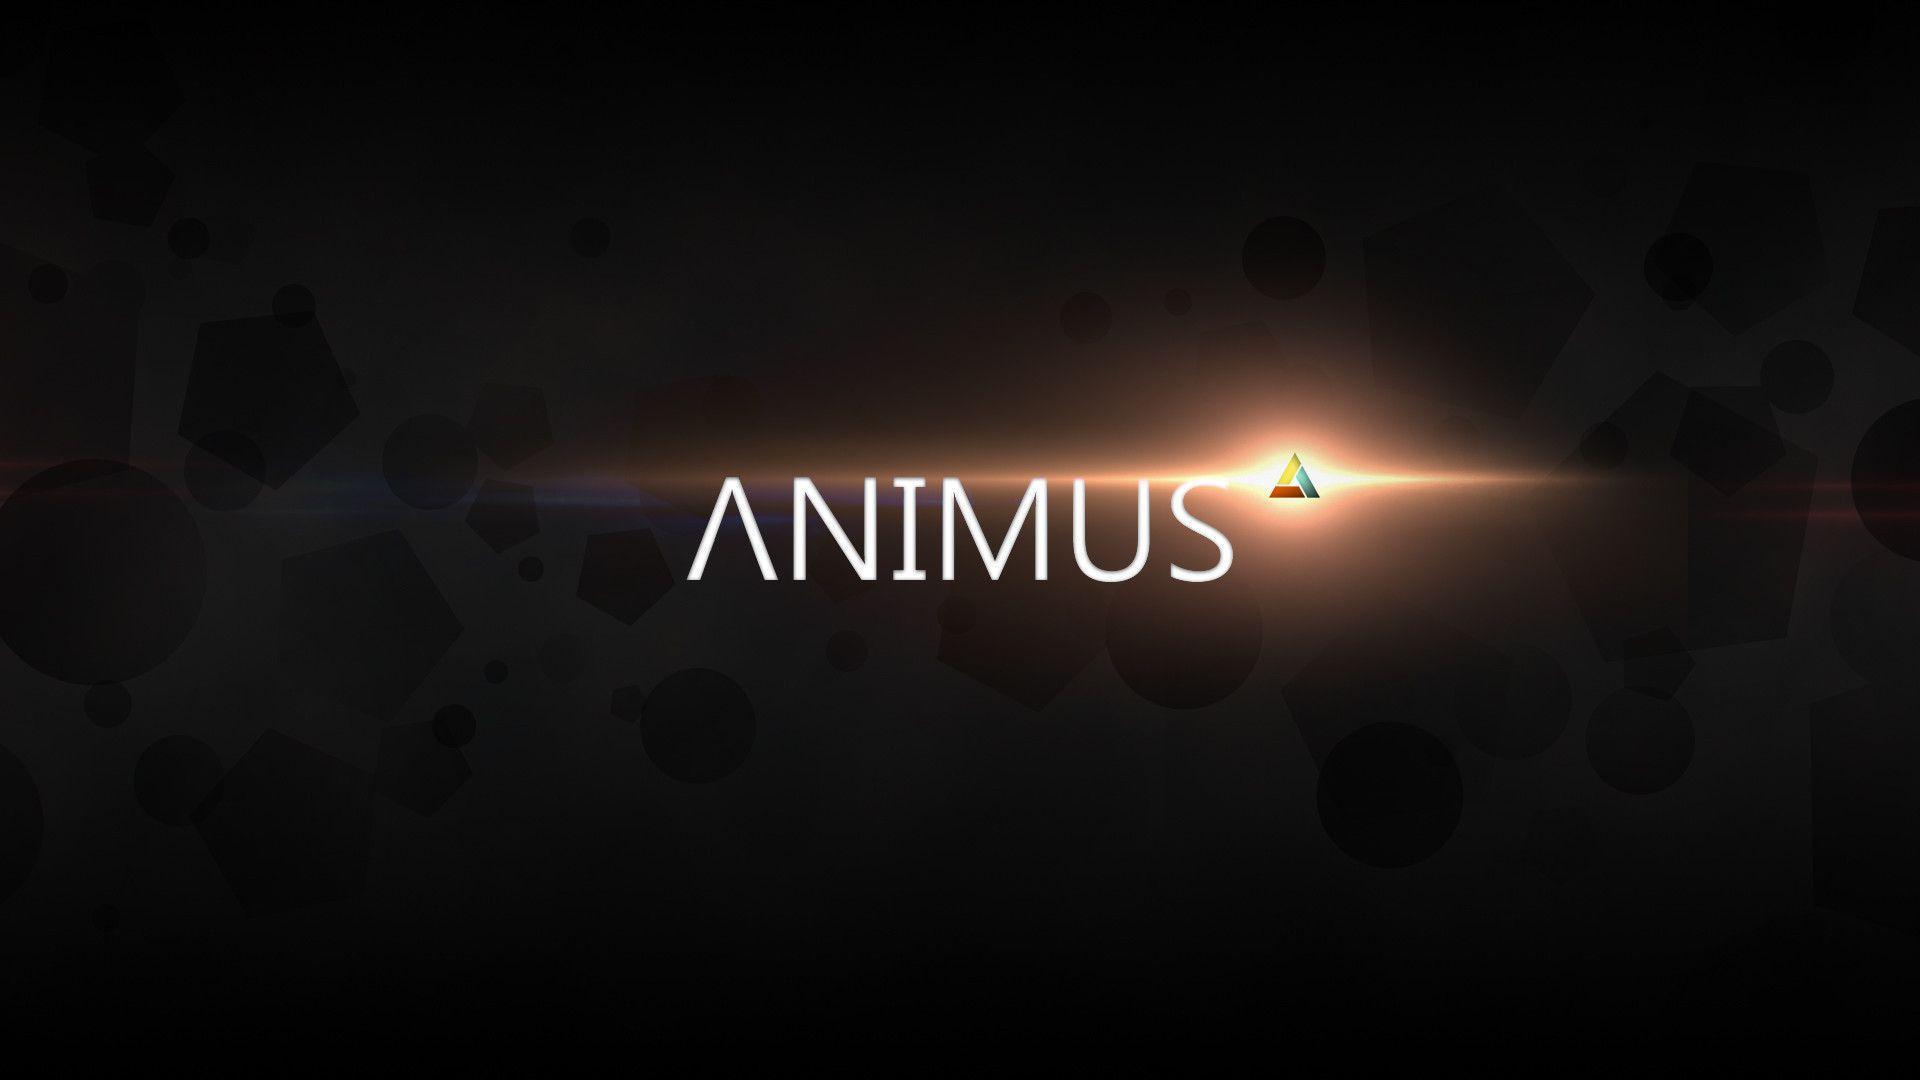 New Animus Assassins Creed Wallpaper HD for Desktop Background